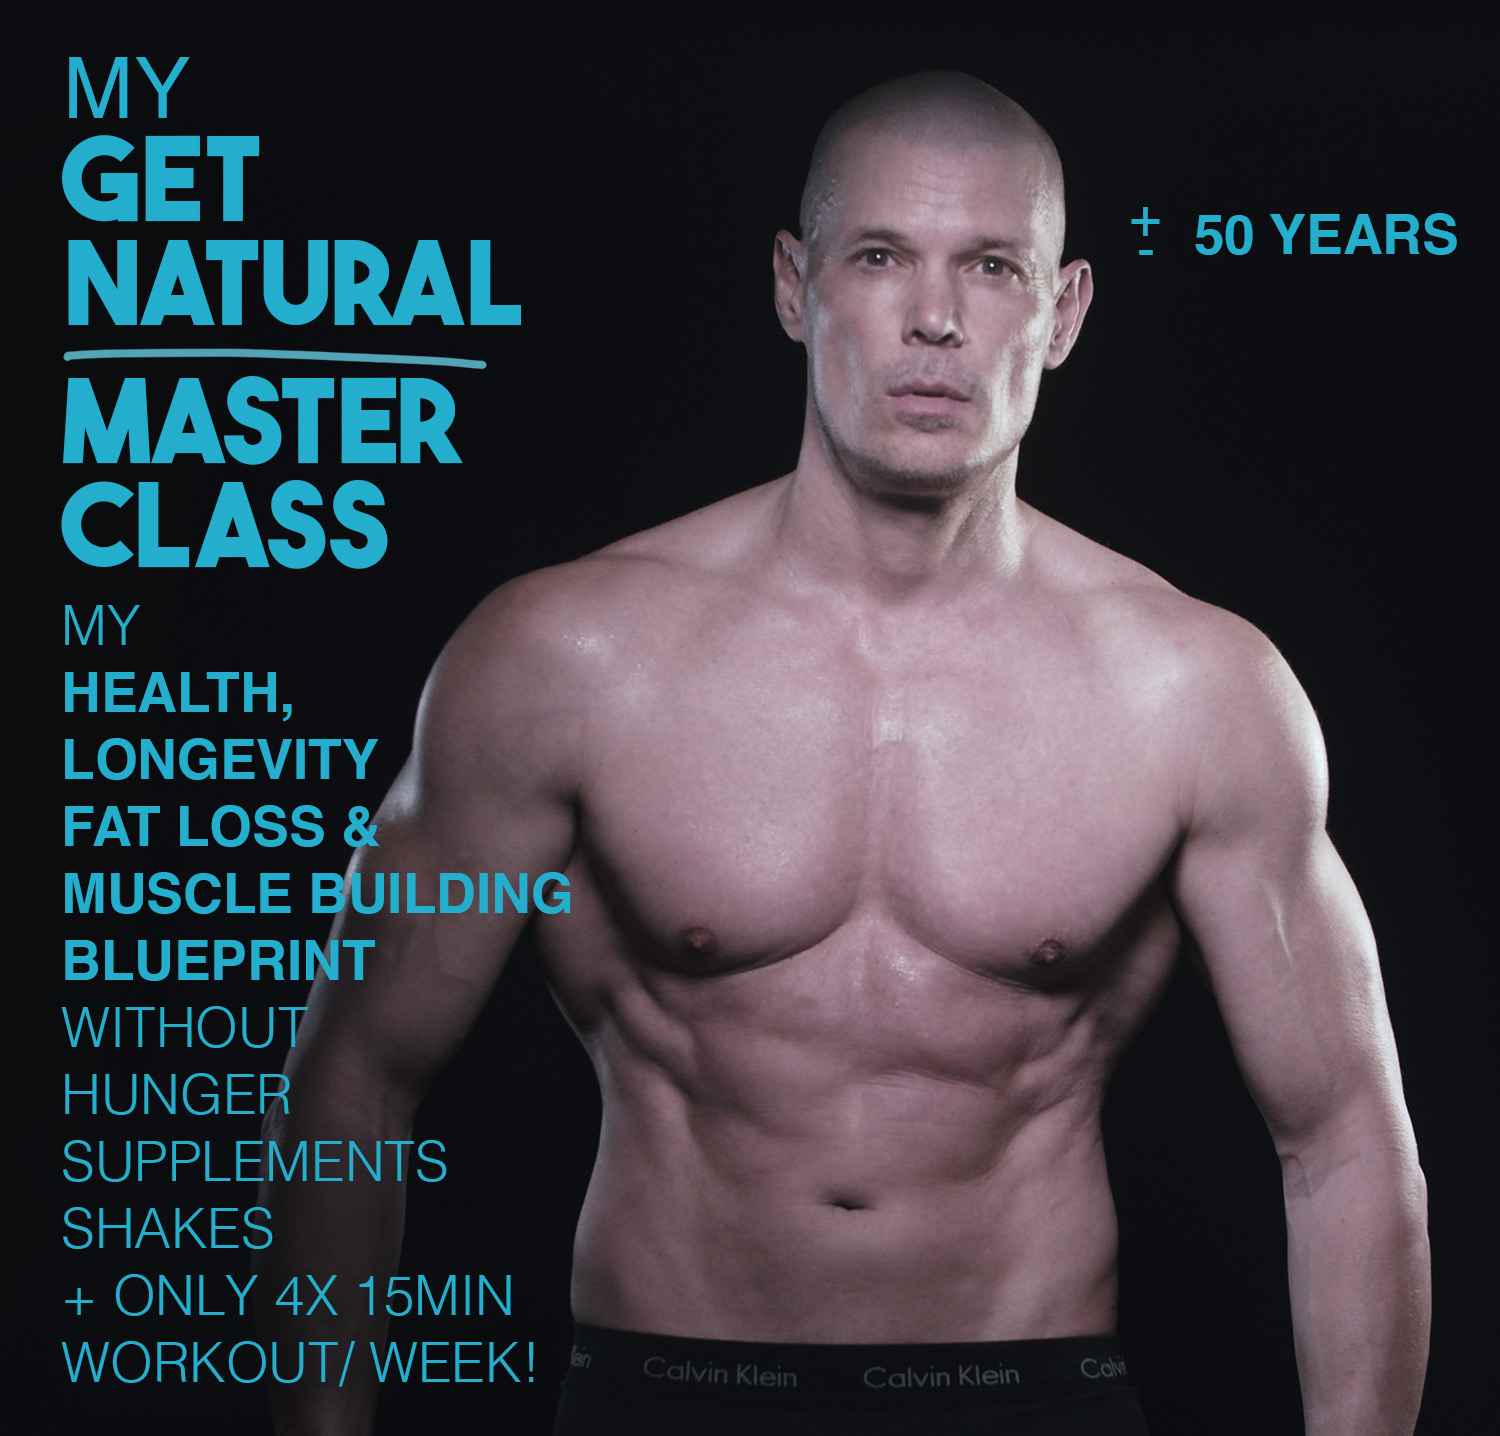 My Get Natural Master Class - Tom Nuyens